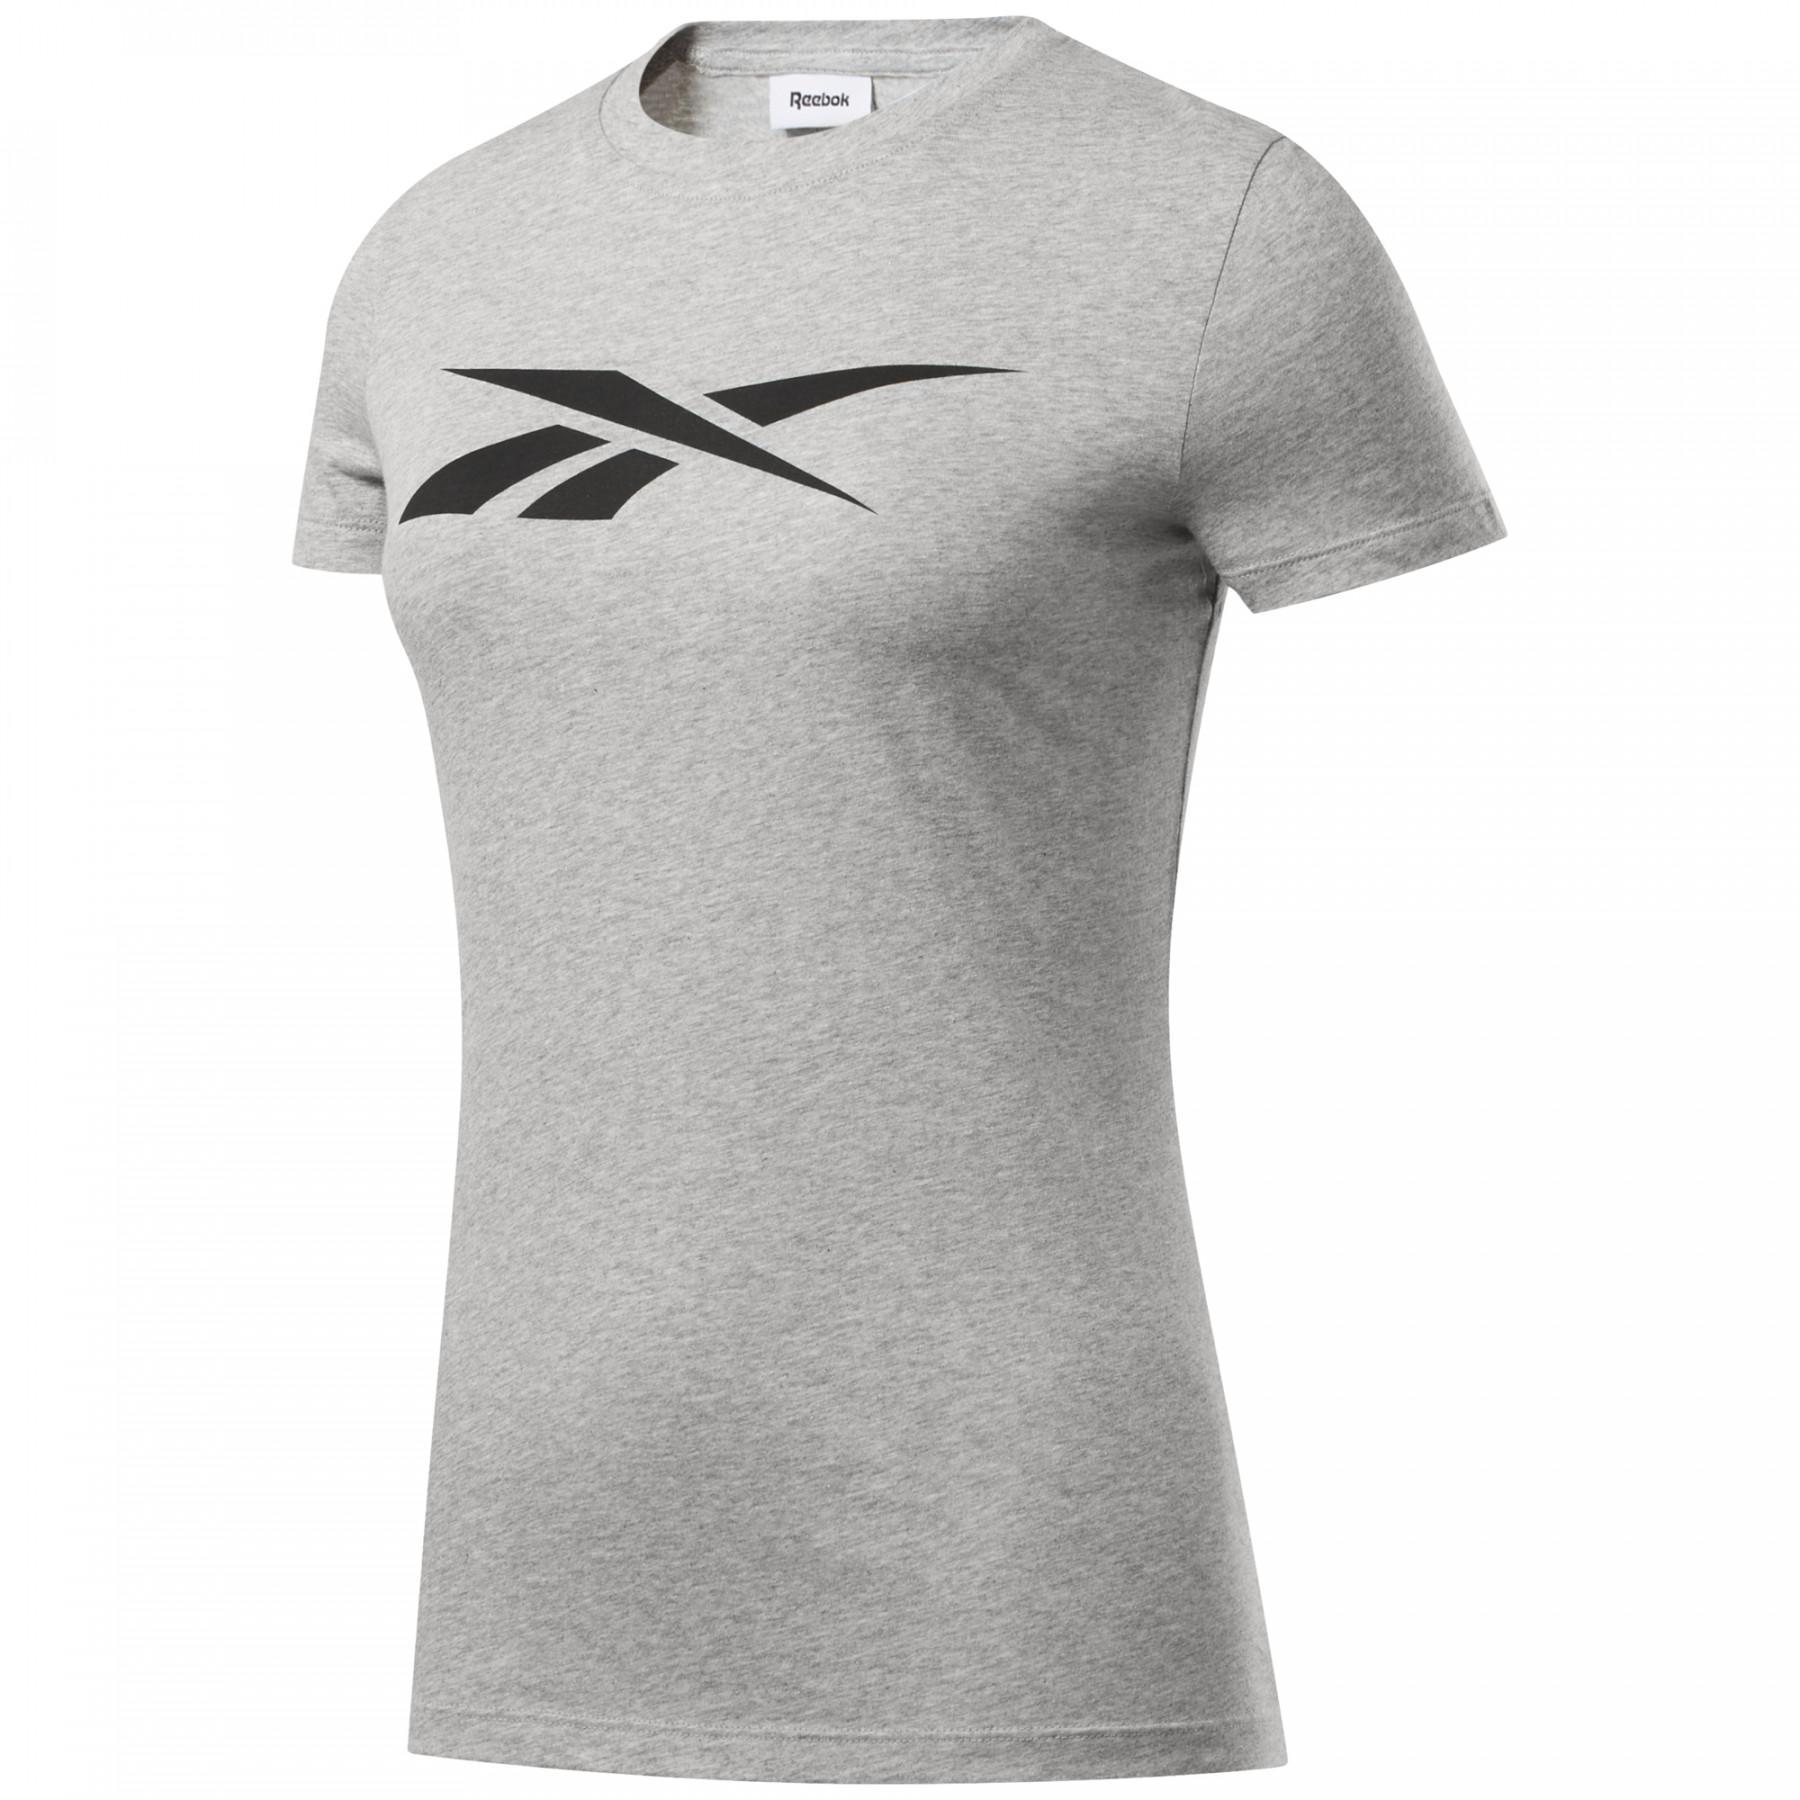 Women's T-shirt Reebok Vector Graphic